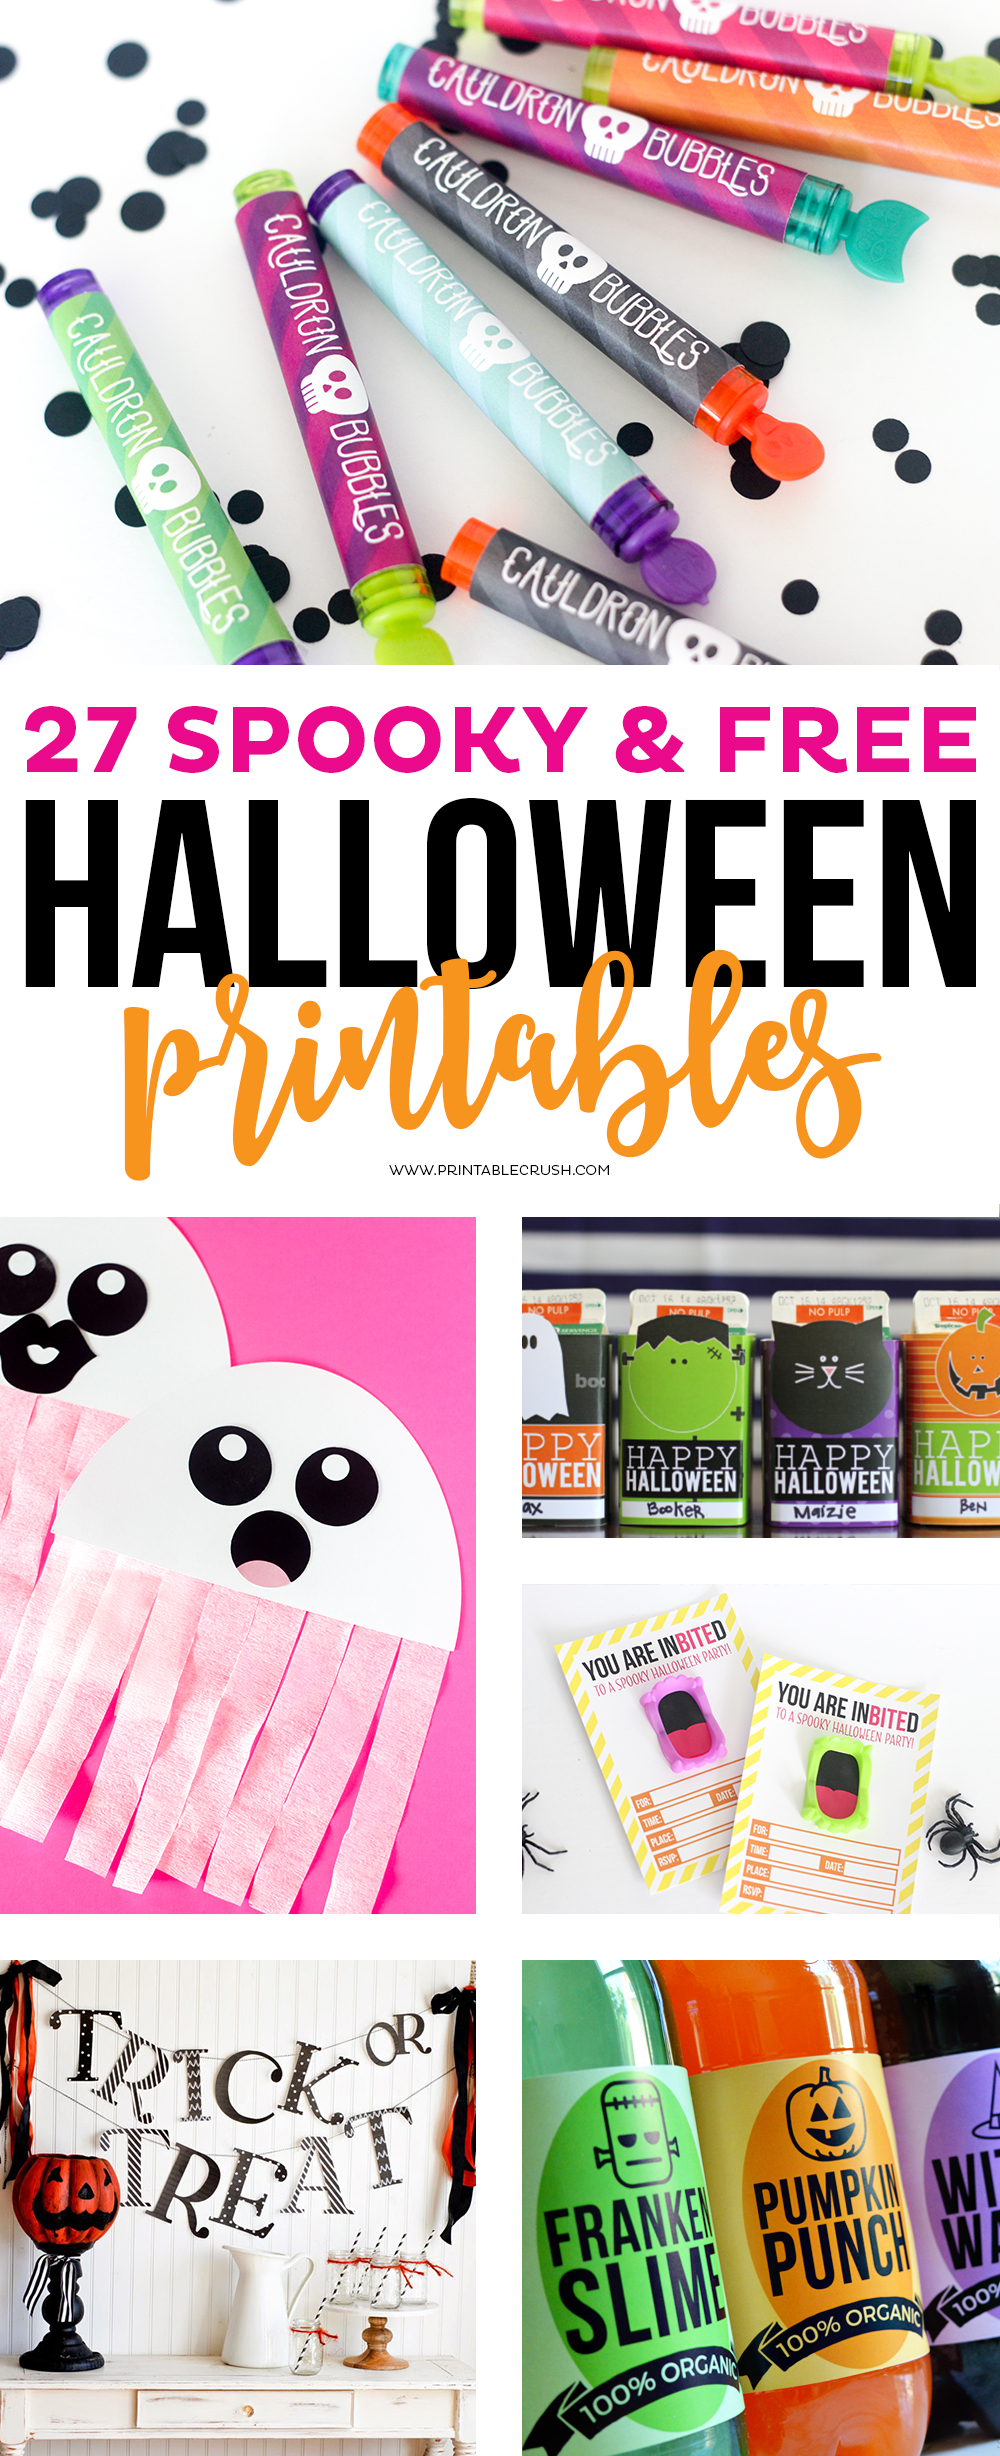 http://printablecrush.com/wp-content/uploads/2016/10/27-spooky-free-halloween-printables.jpg